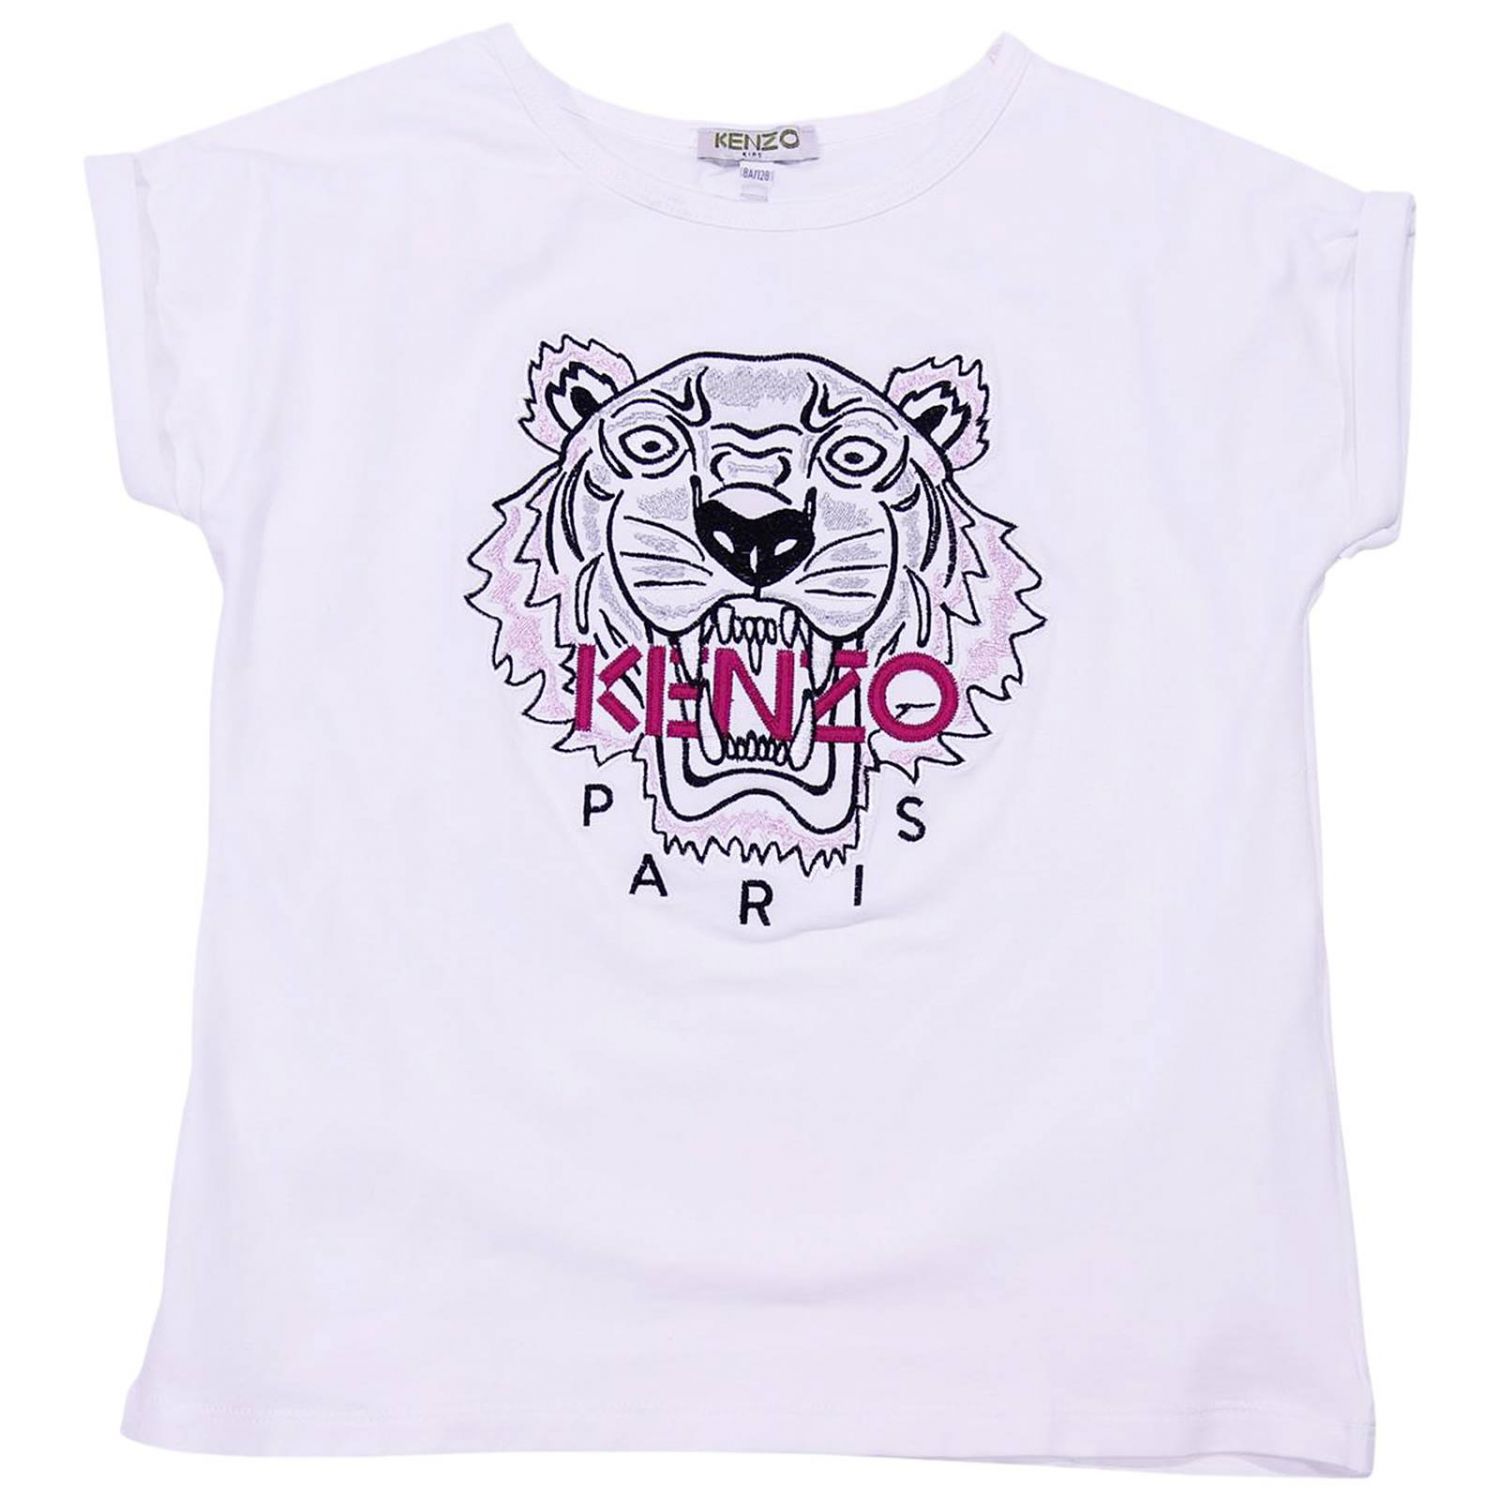 Kenzo T Shirt Junior Flash Sales, 55% OFF | www.propellermadrid.com